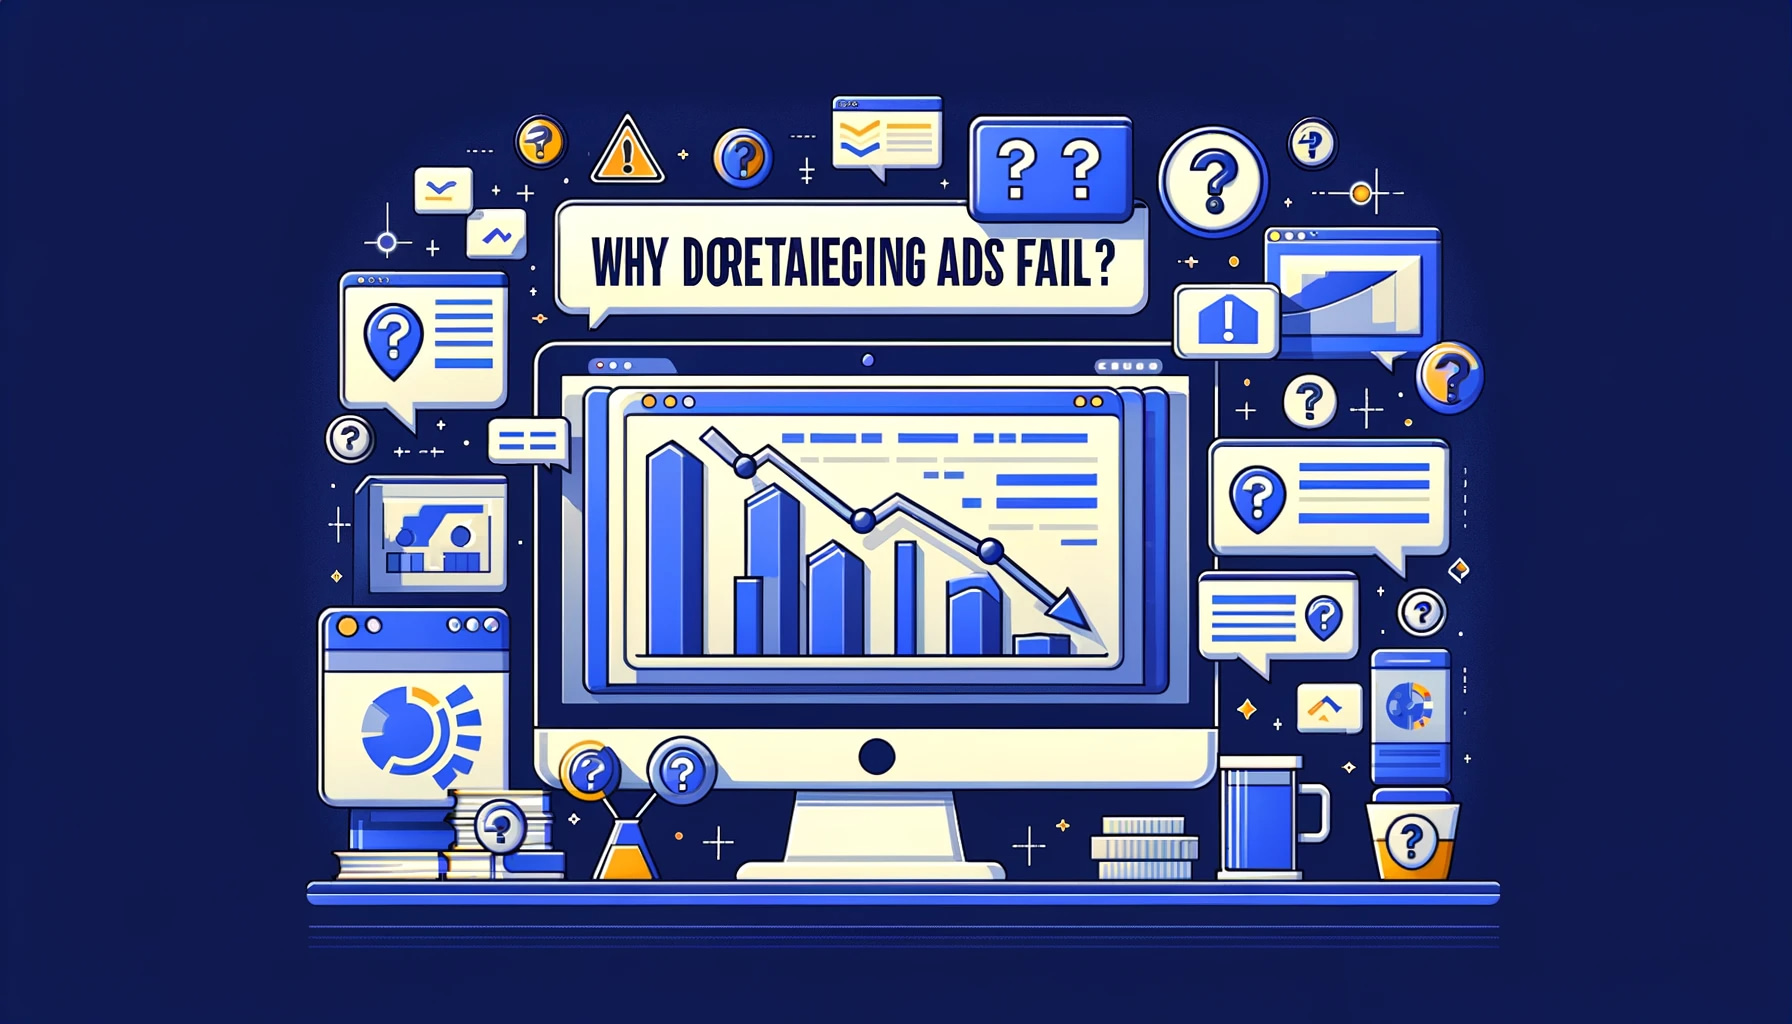 Why Do Retargeting Ads Fail?